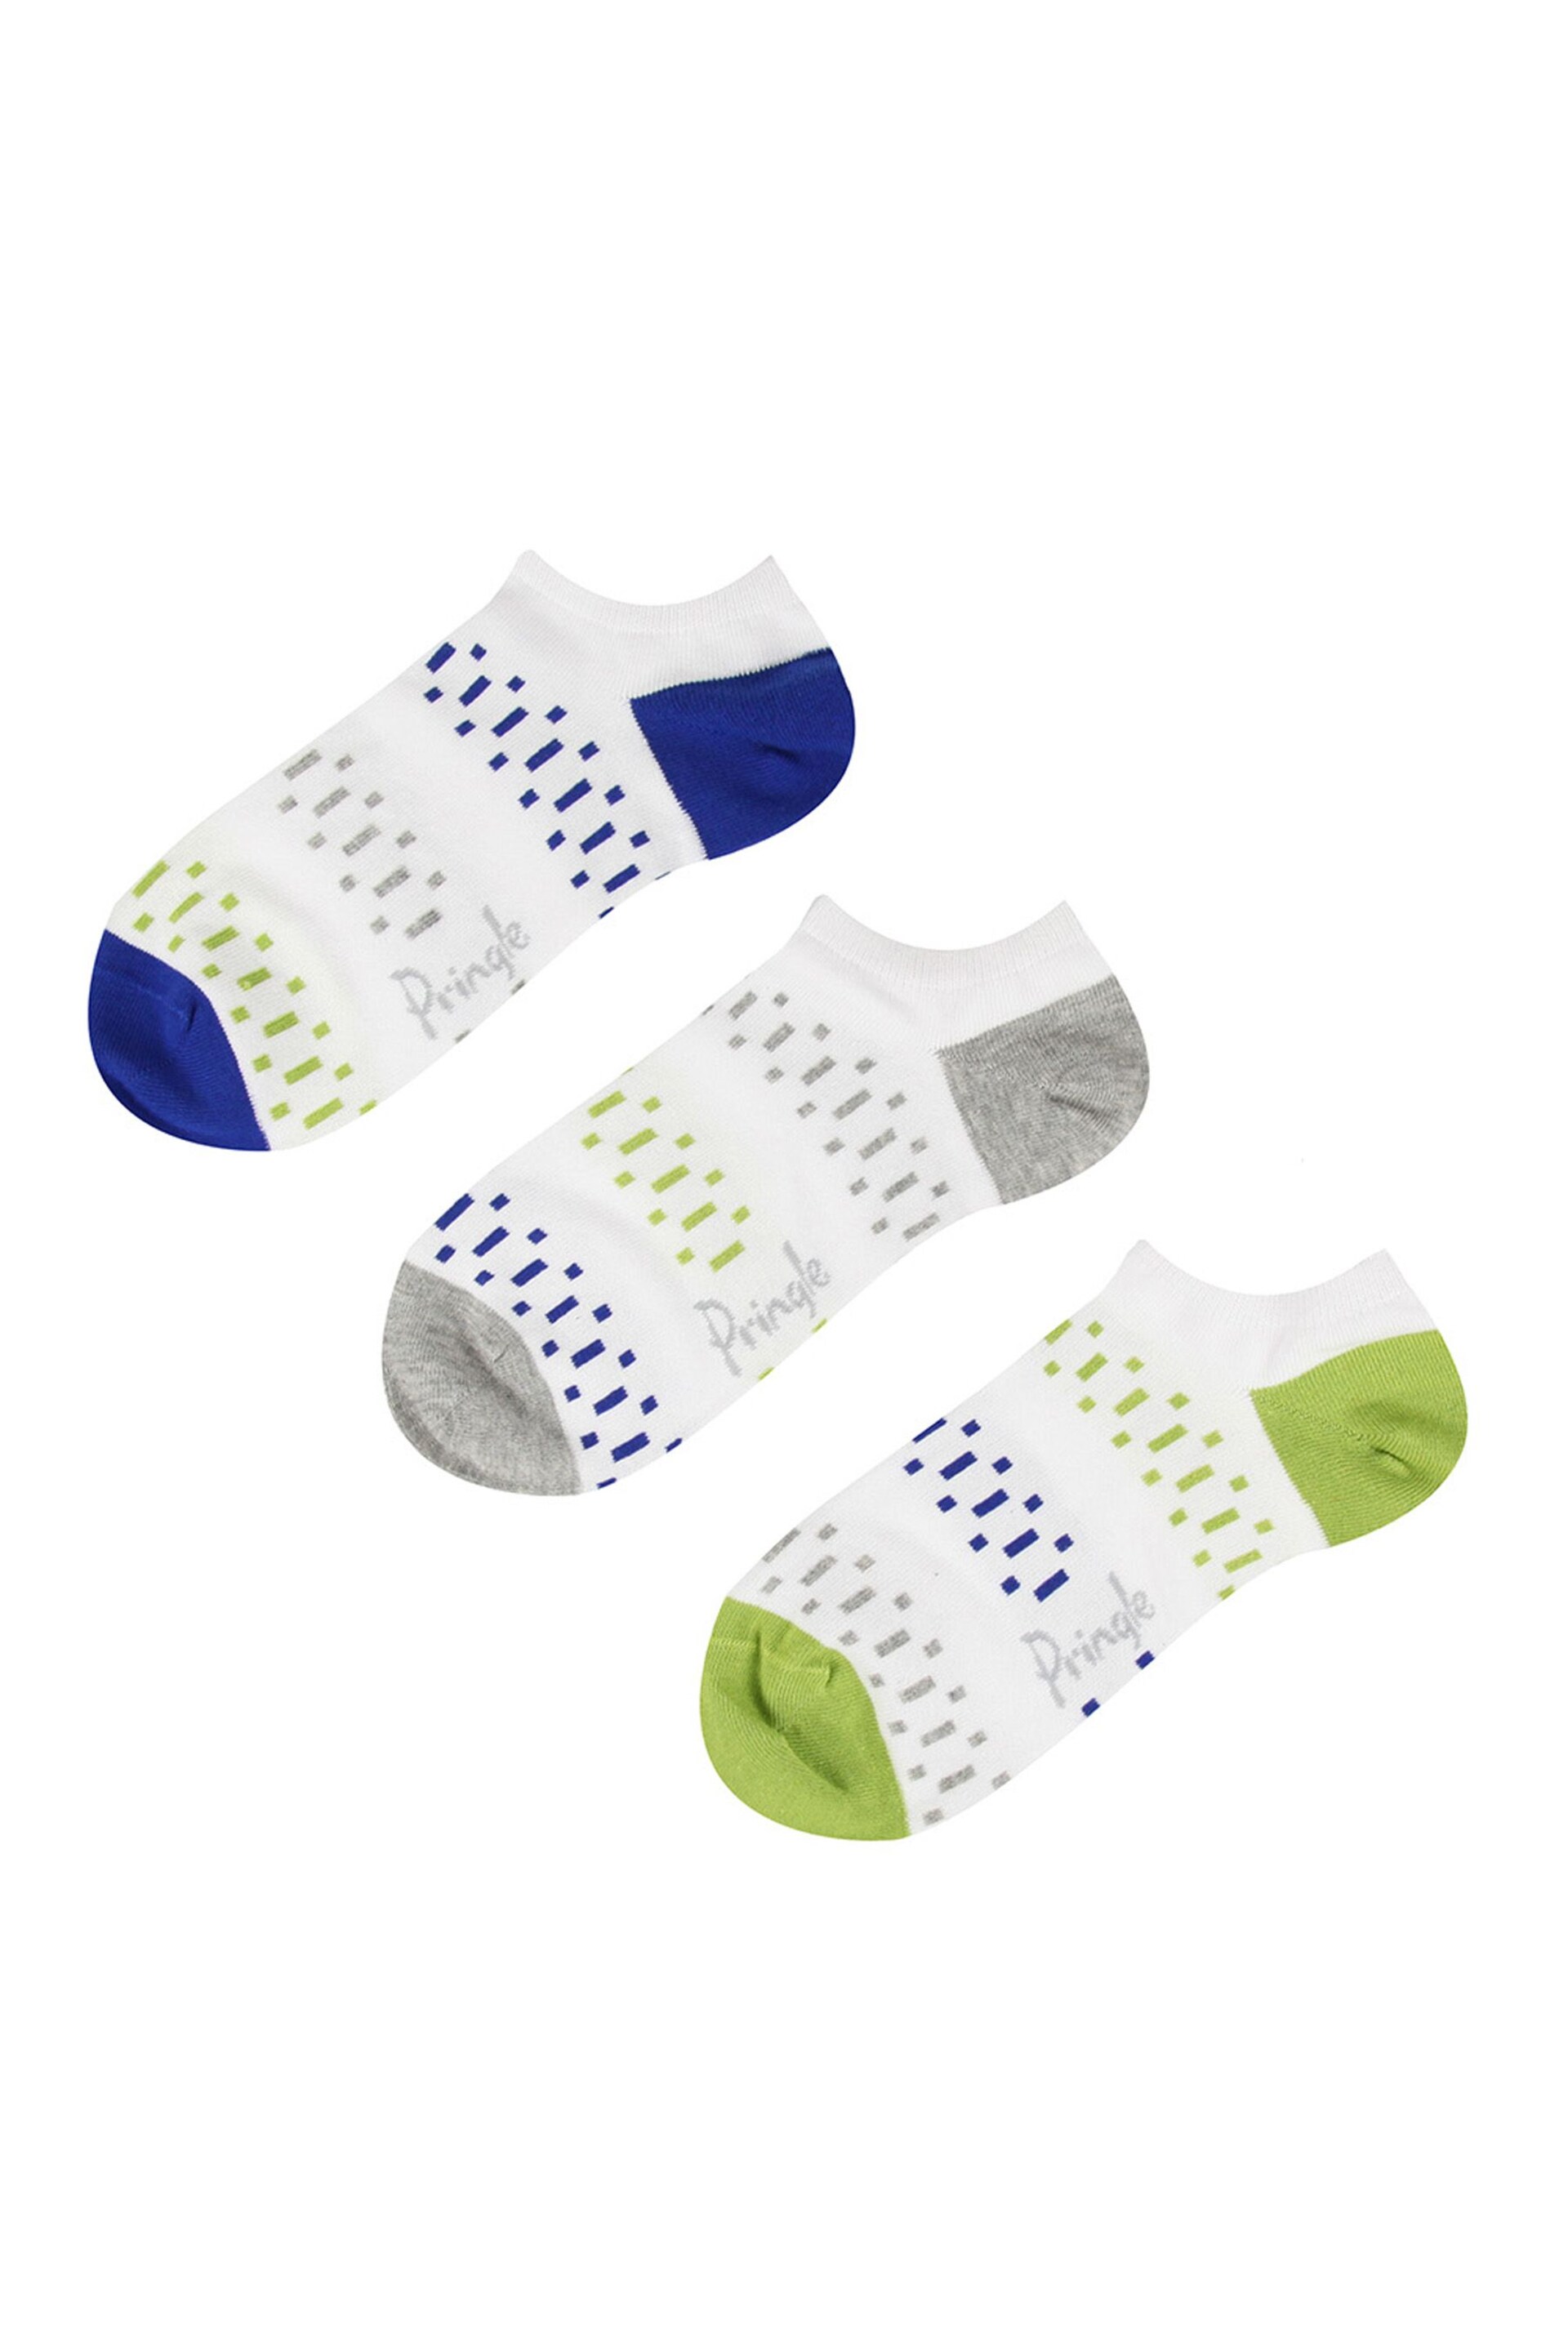 Pringle White Fashion Pop Colour Trainer Socks 3PK - Image 4 of 4